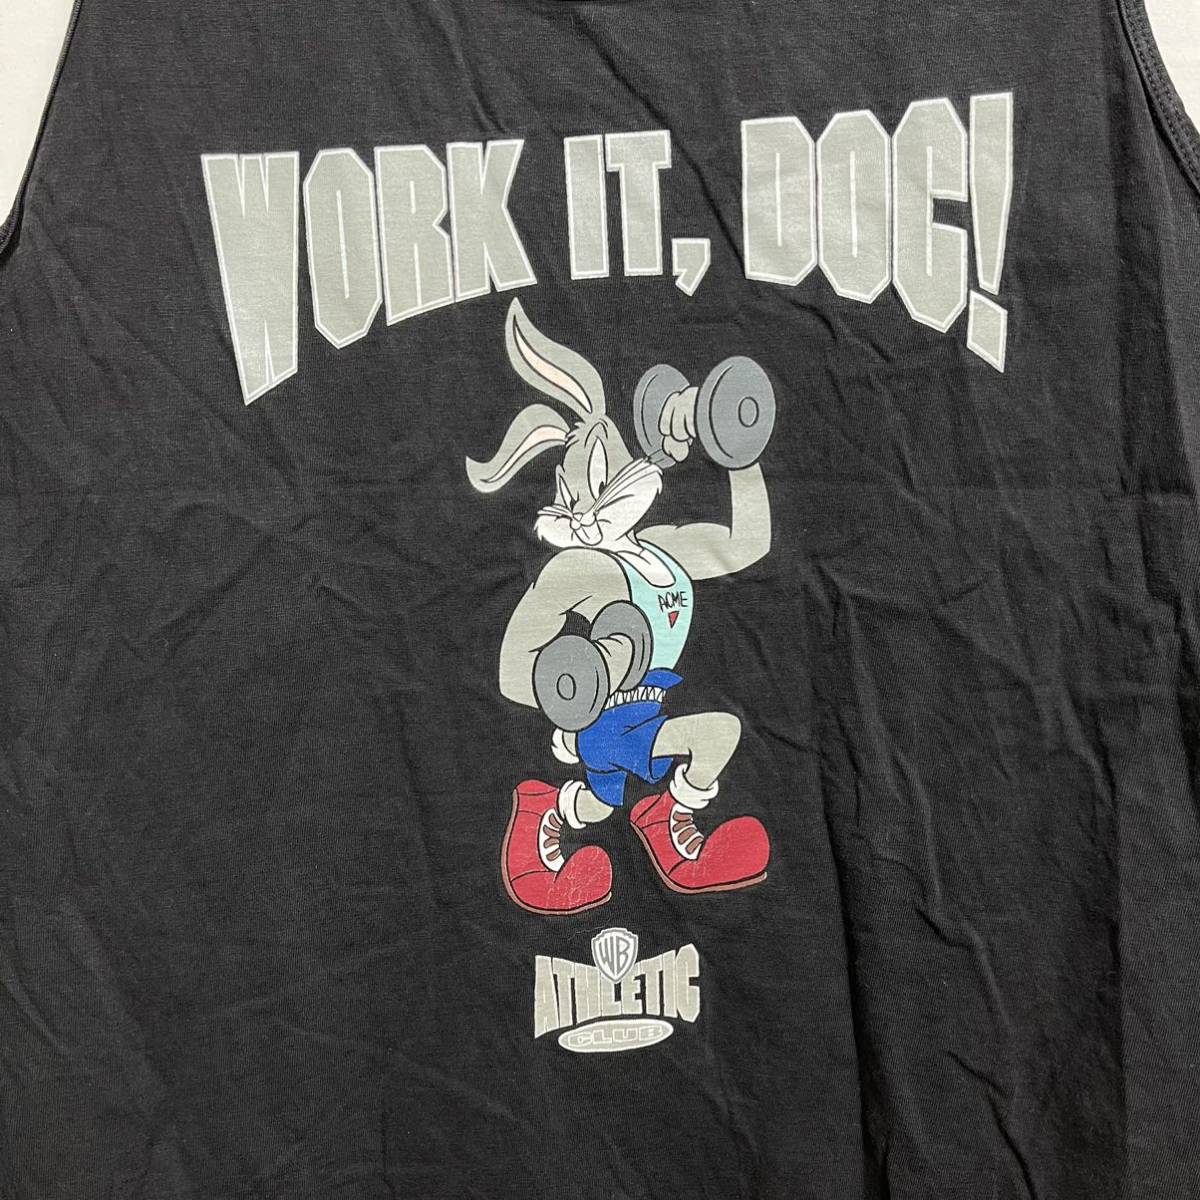 # ACME CLOTHING Warner Bros Looney Tunes Bugs Bunny m Kim ki.tore illustration print tank top old clothes size L black #